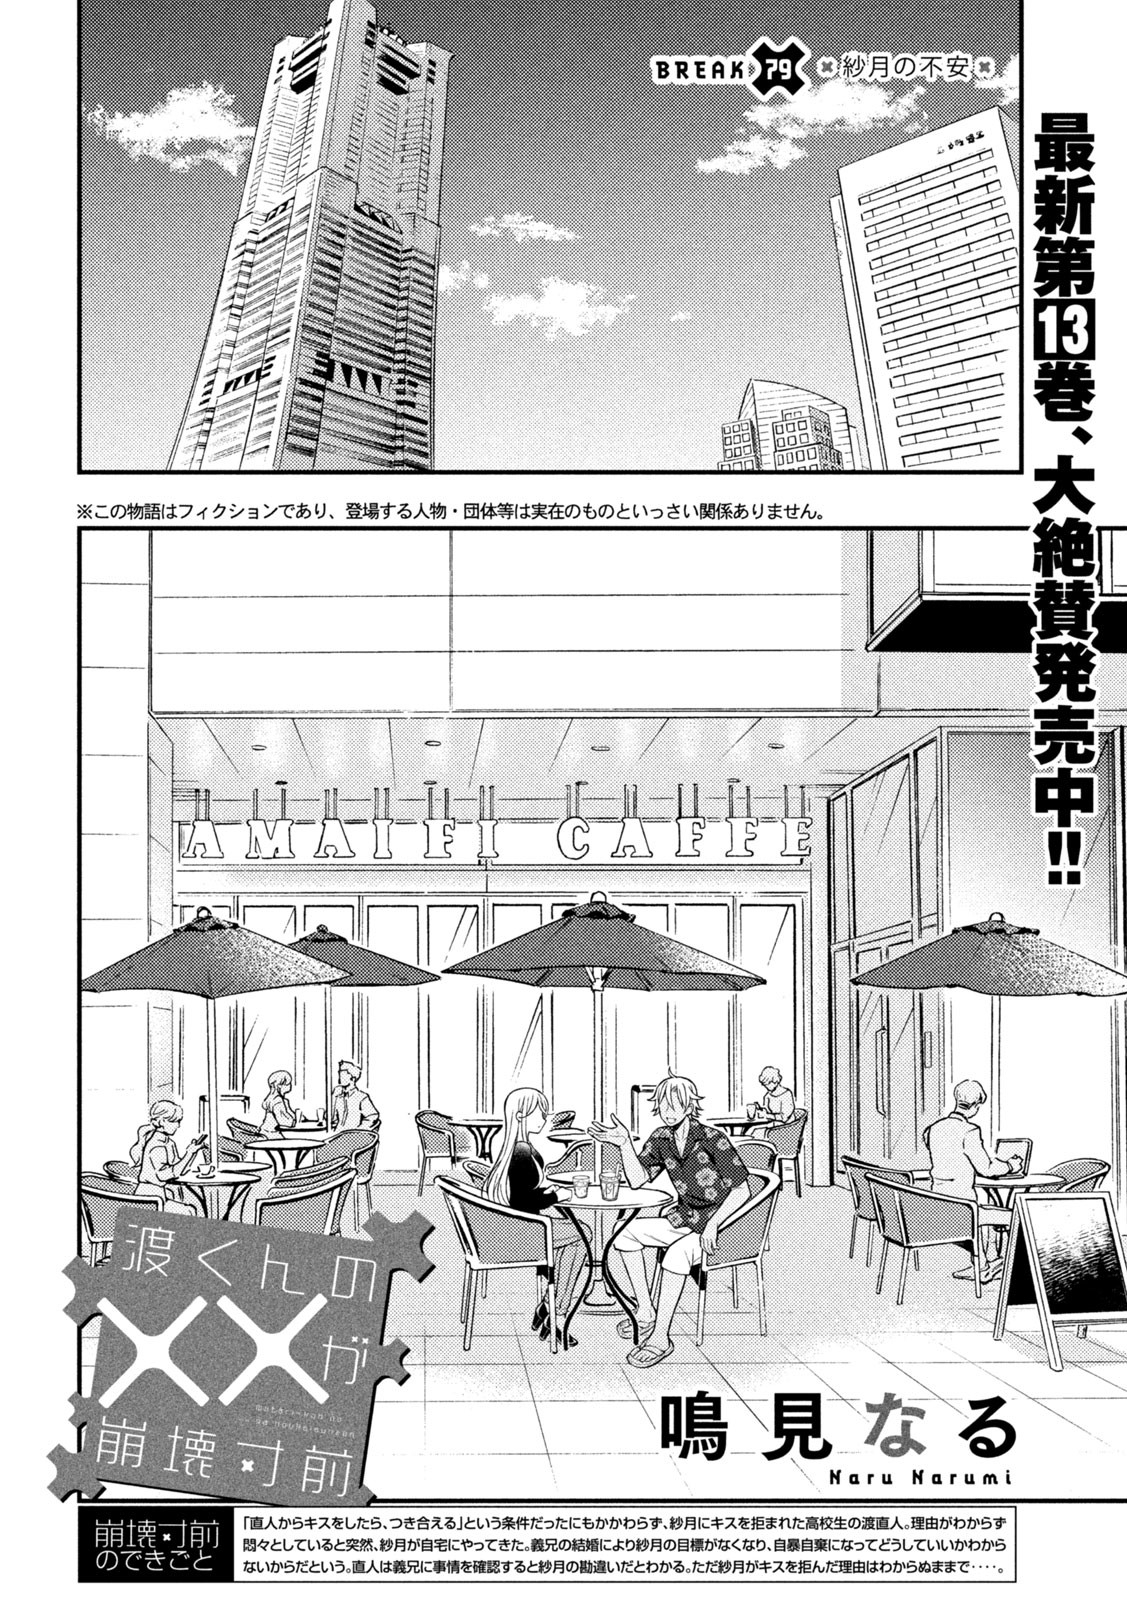 Watari-kun no xx ga Houkai Sunzen - Chapter 79 - Page 2